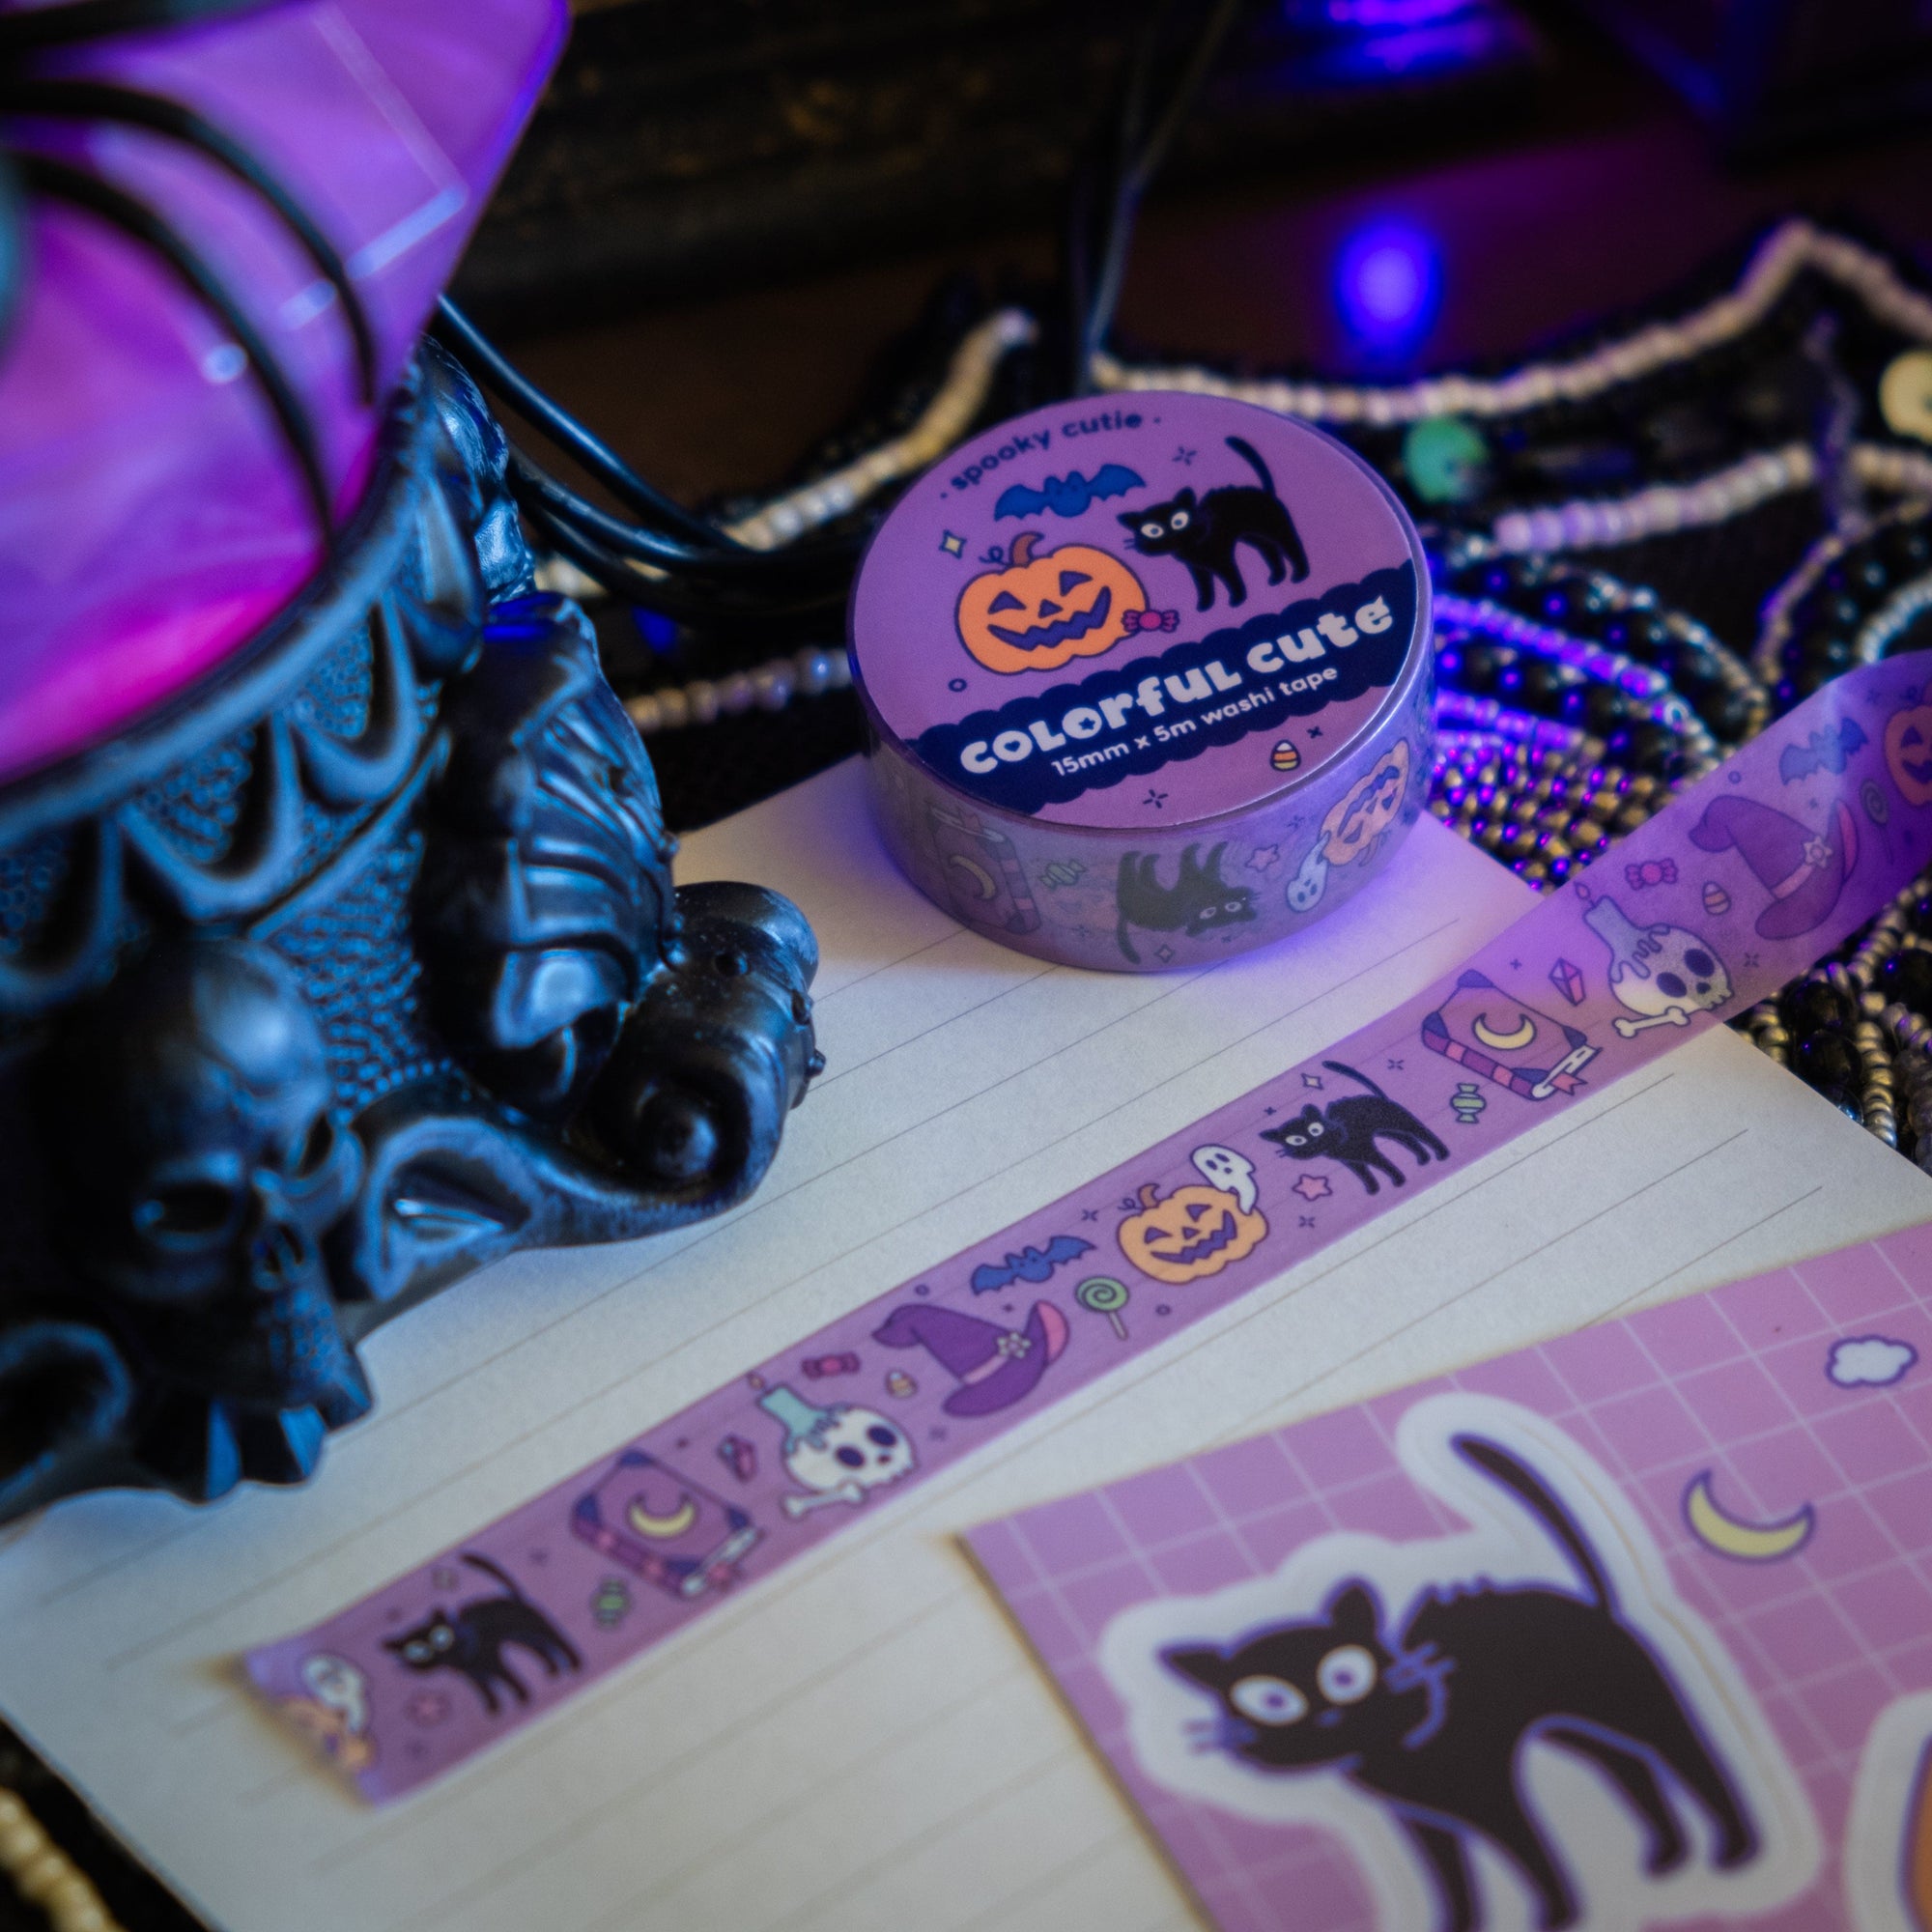 Spooky Cutie Washi Tape Spooky Cutie Collection